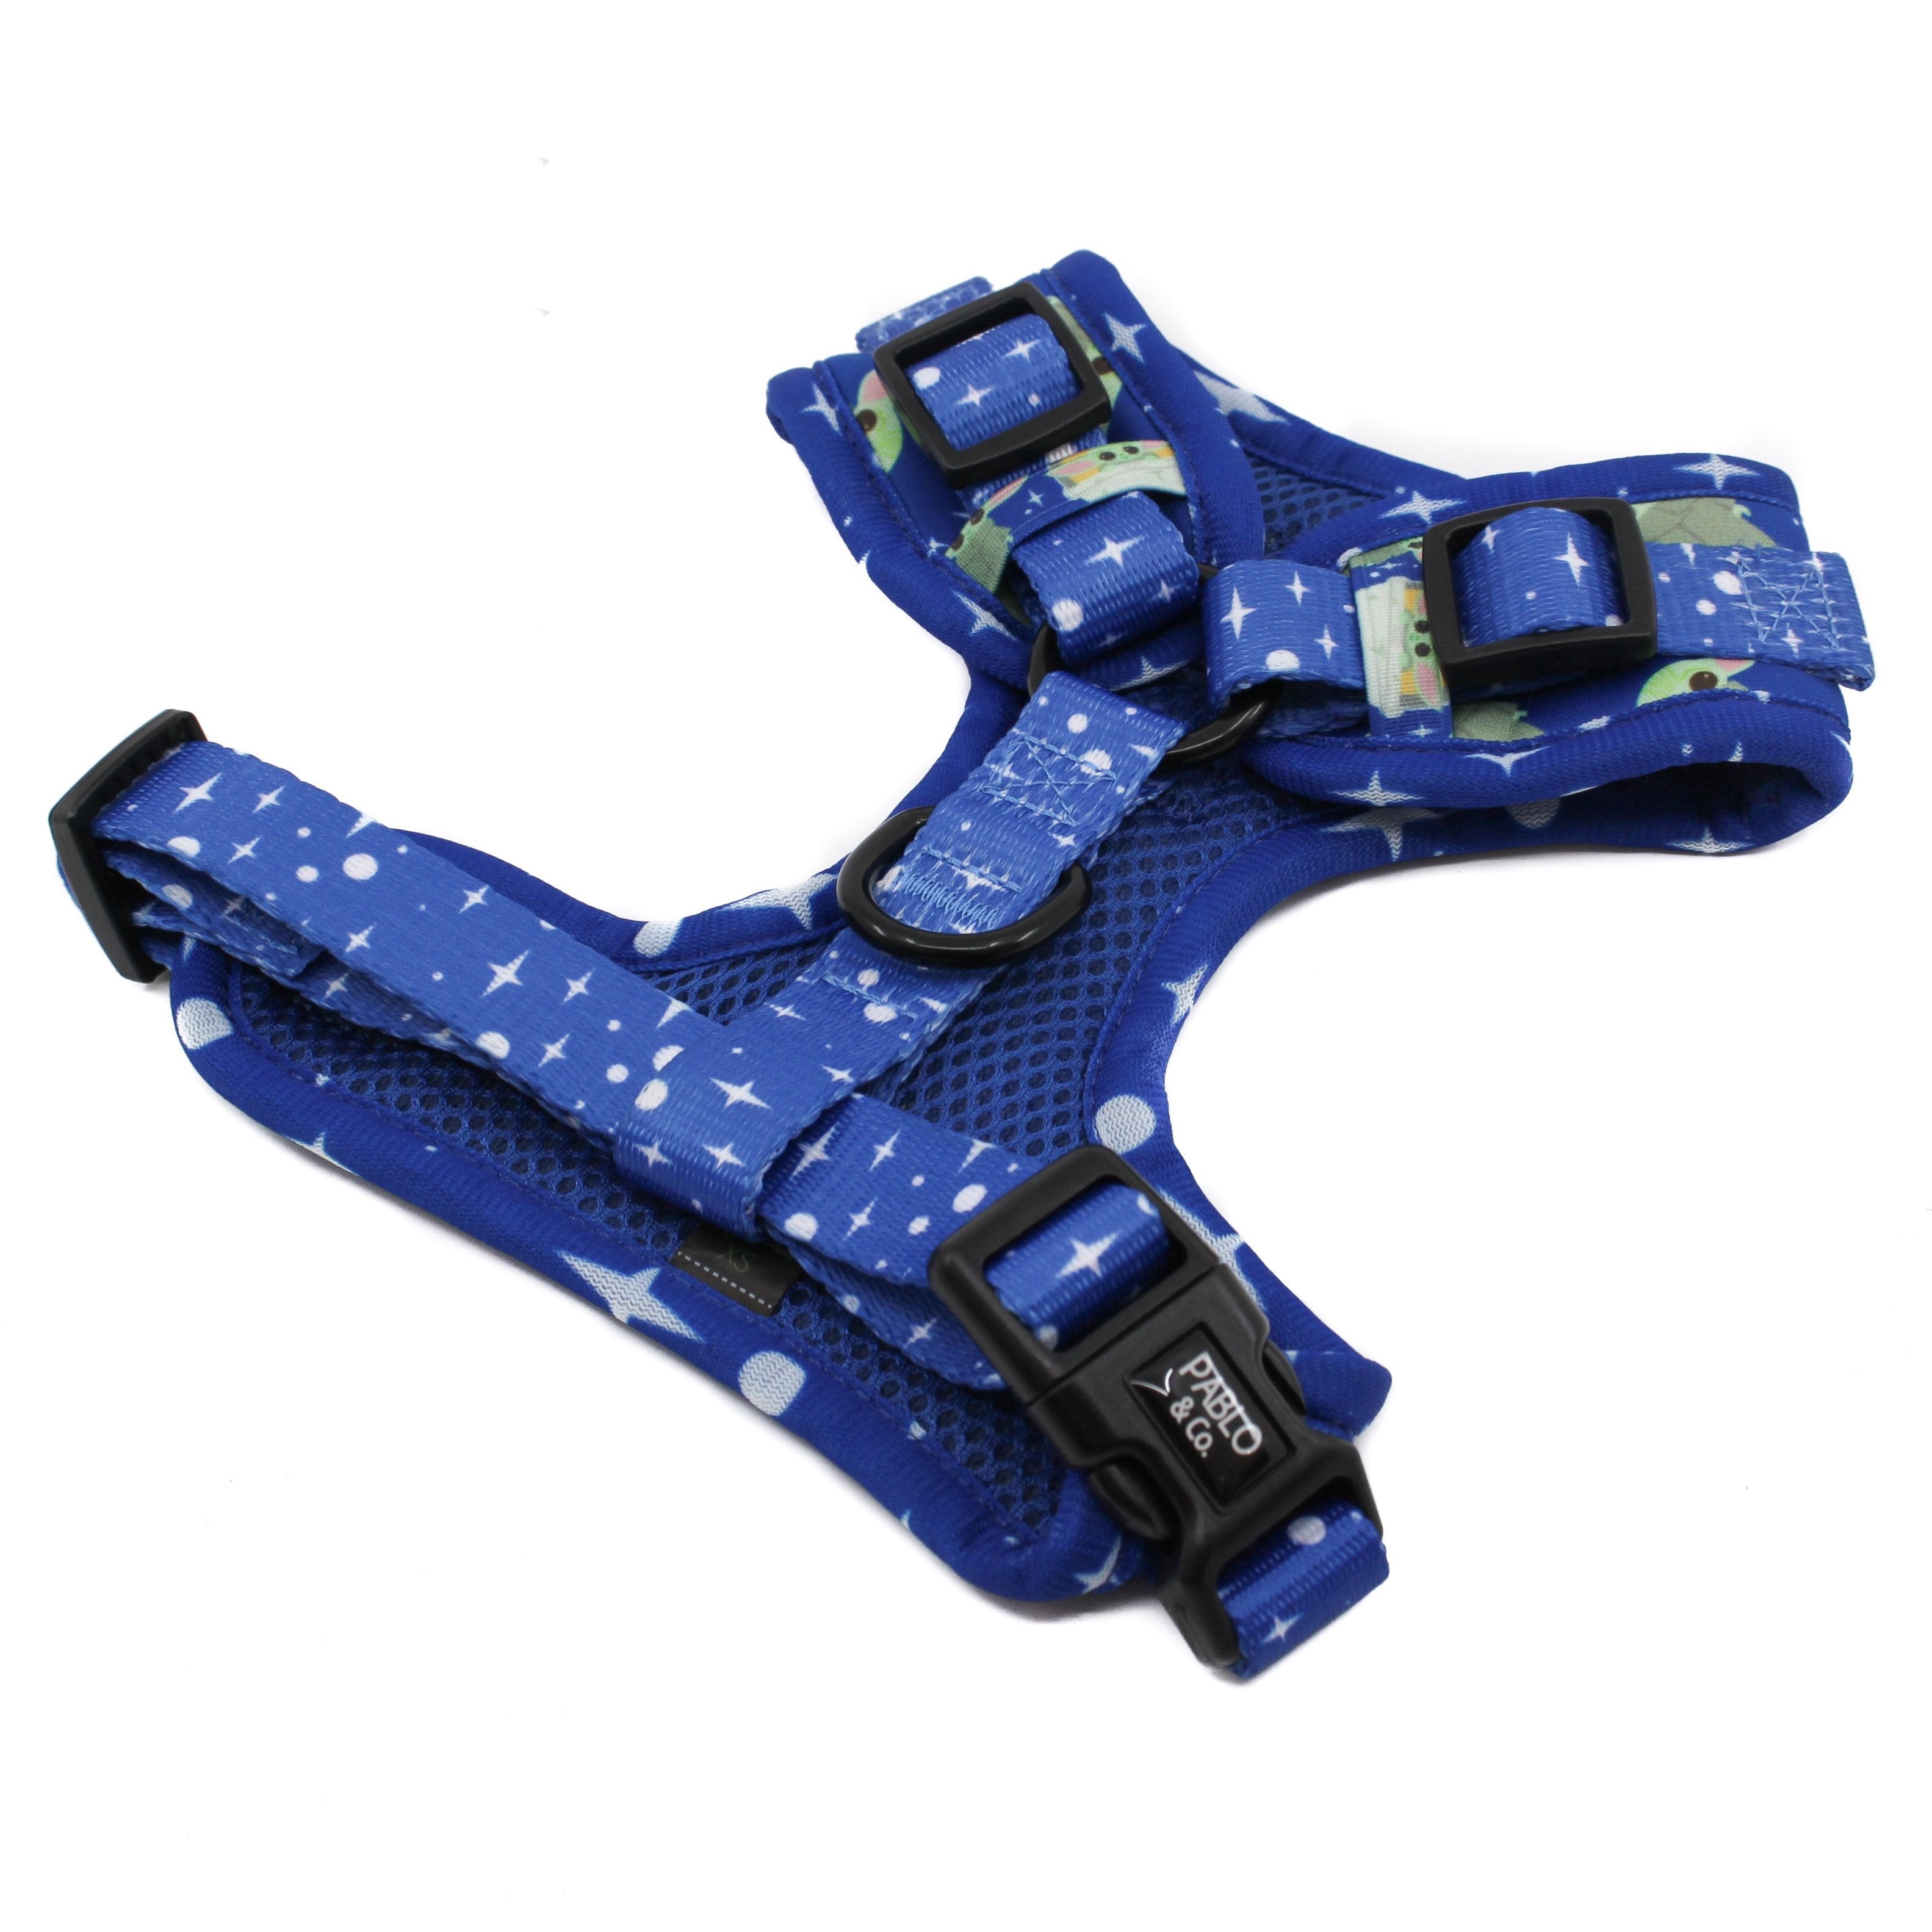 PABLO & CO x STAR WARS - Grogu Adjustable Dog Harness